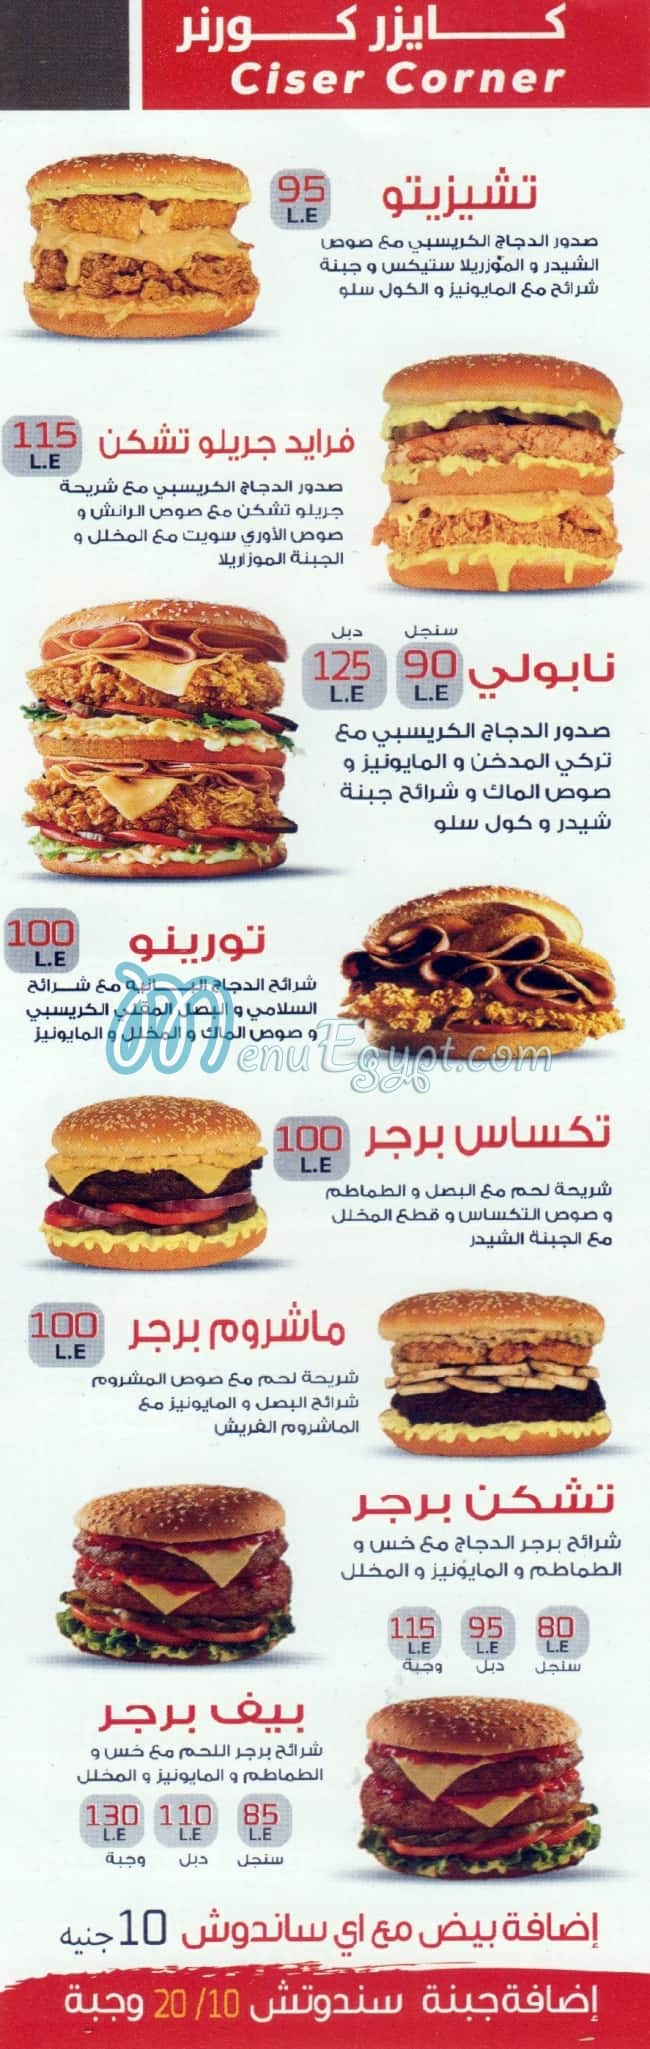 Chikno menu Egypt 6